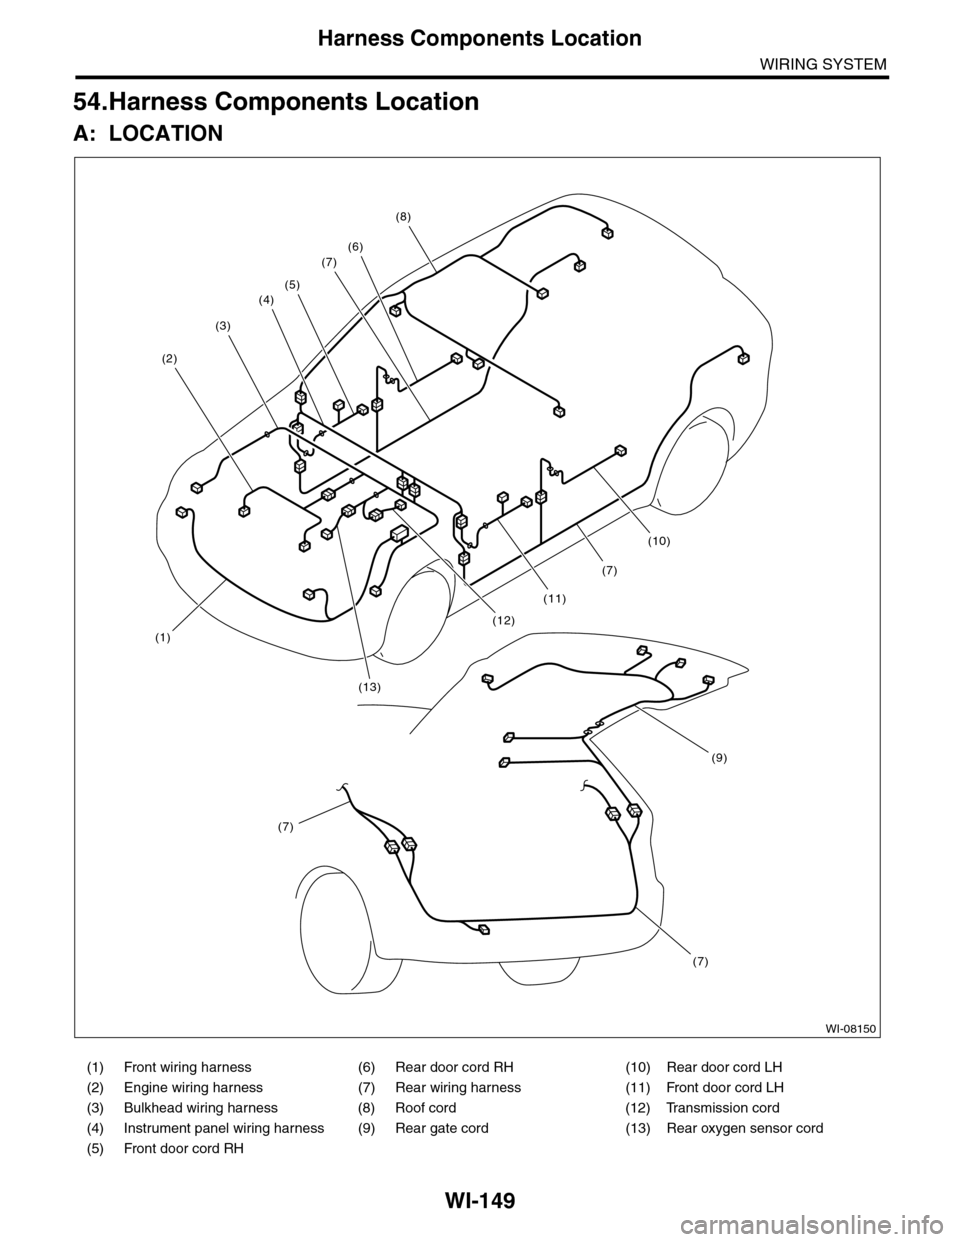 SUBARU TRIBECA 2009 1.G Service Workshop Manual WI-149
Harness Components Location
WIRING SYSTEM
54.Harness Components Location
A: LOCATION
(1) Front wiring harness (6) Rear door cord RH (10) Rear door cord LH
(2) Engine wiring harness (7) Rear wir